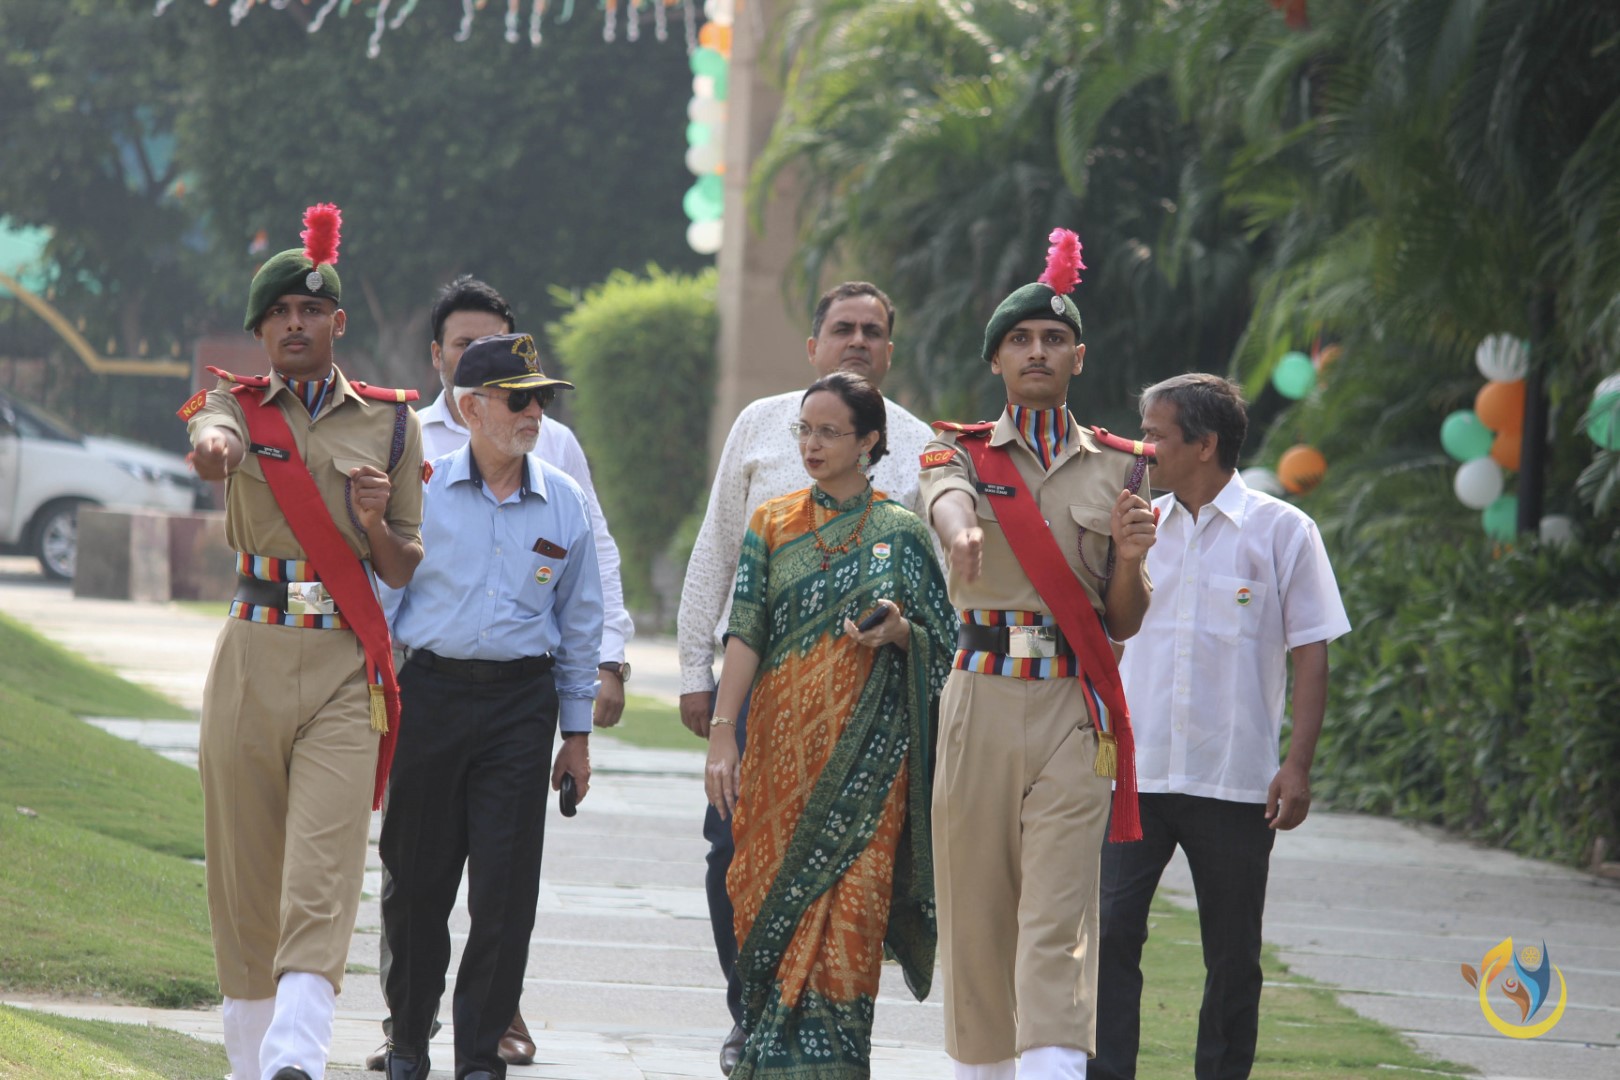 Swaraj - Independence Day Celebration